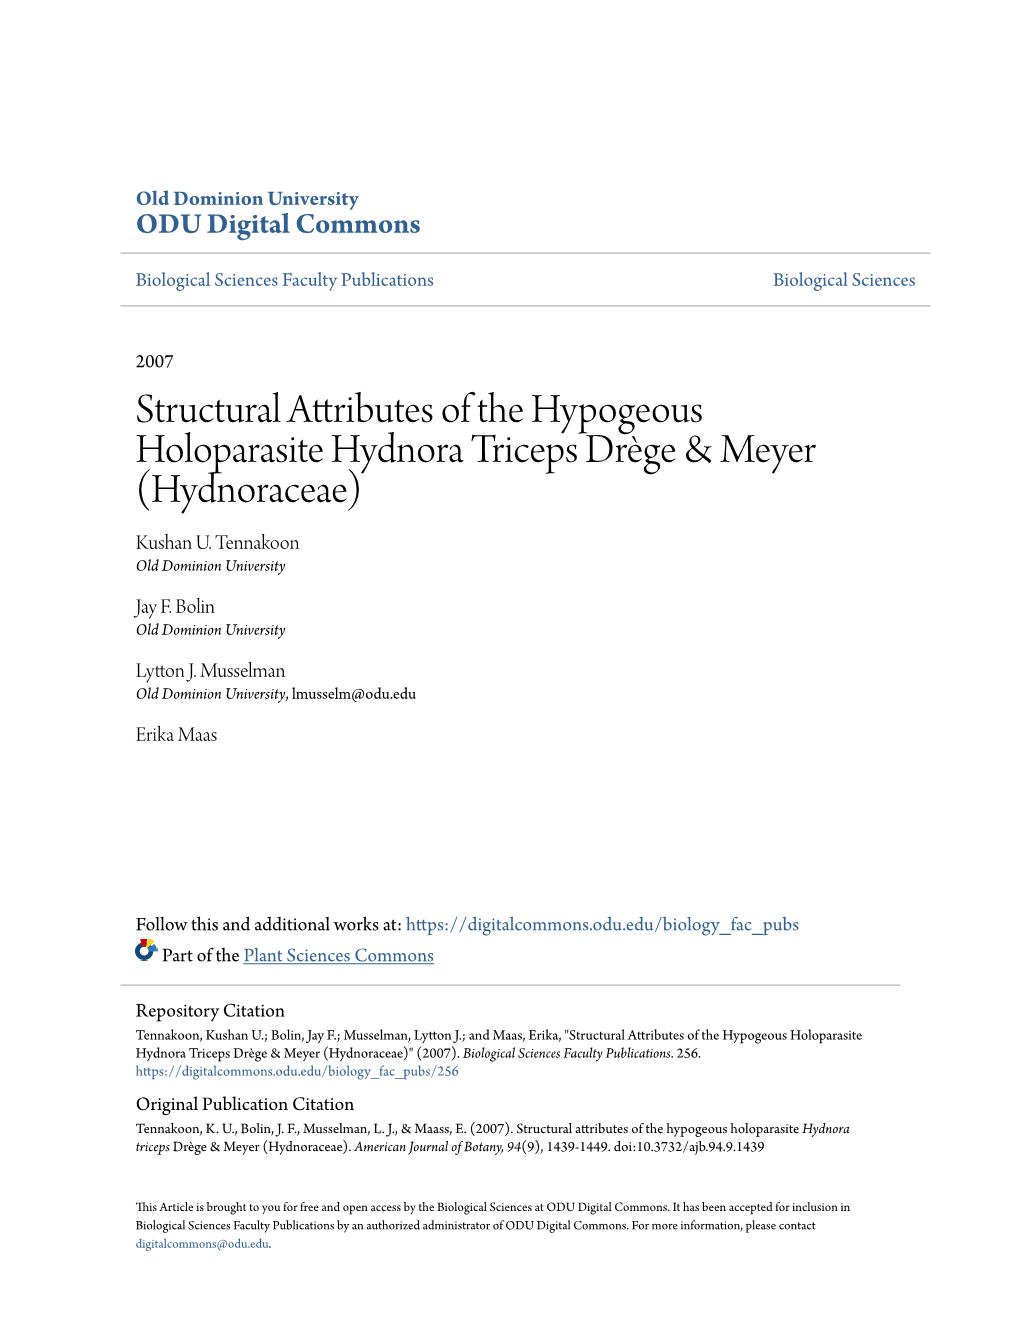 Structural Attributes of the Hypogeous Holoparasite Hydnora Triceps Drège & Meyer (Hydnoraceae) Kushan U